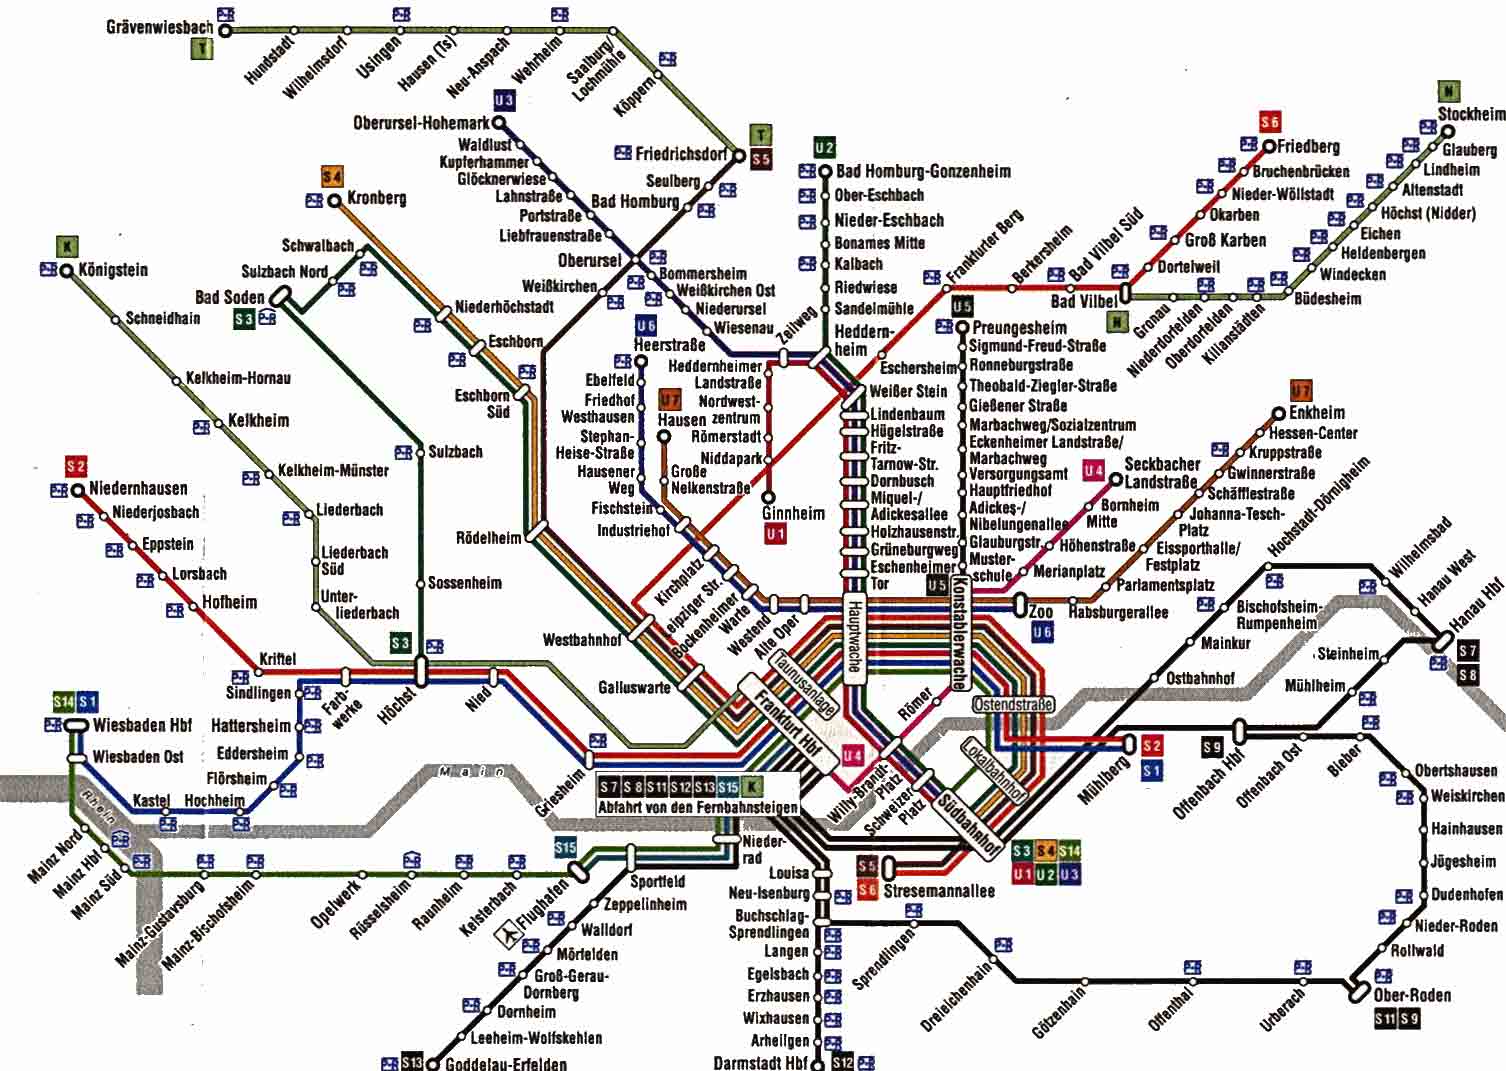 Frankfurt railway system